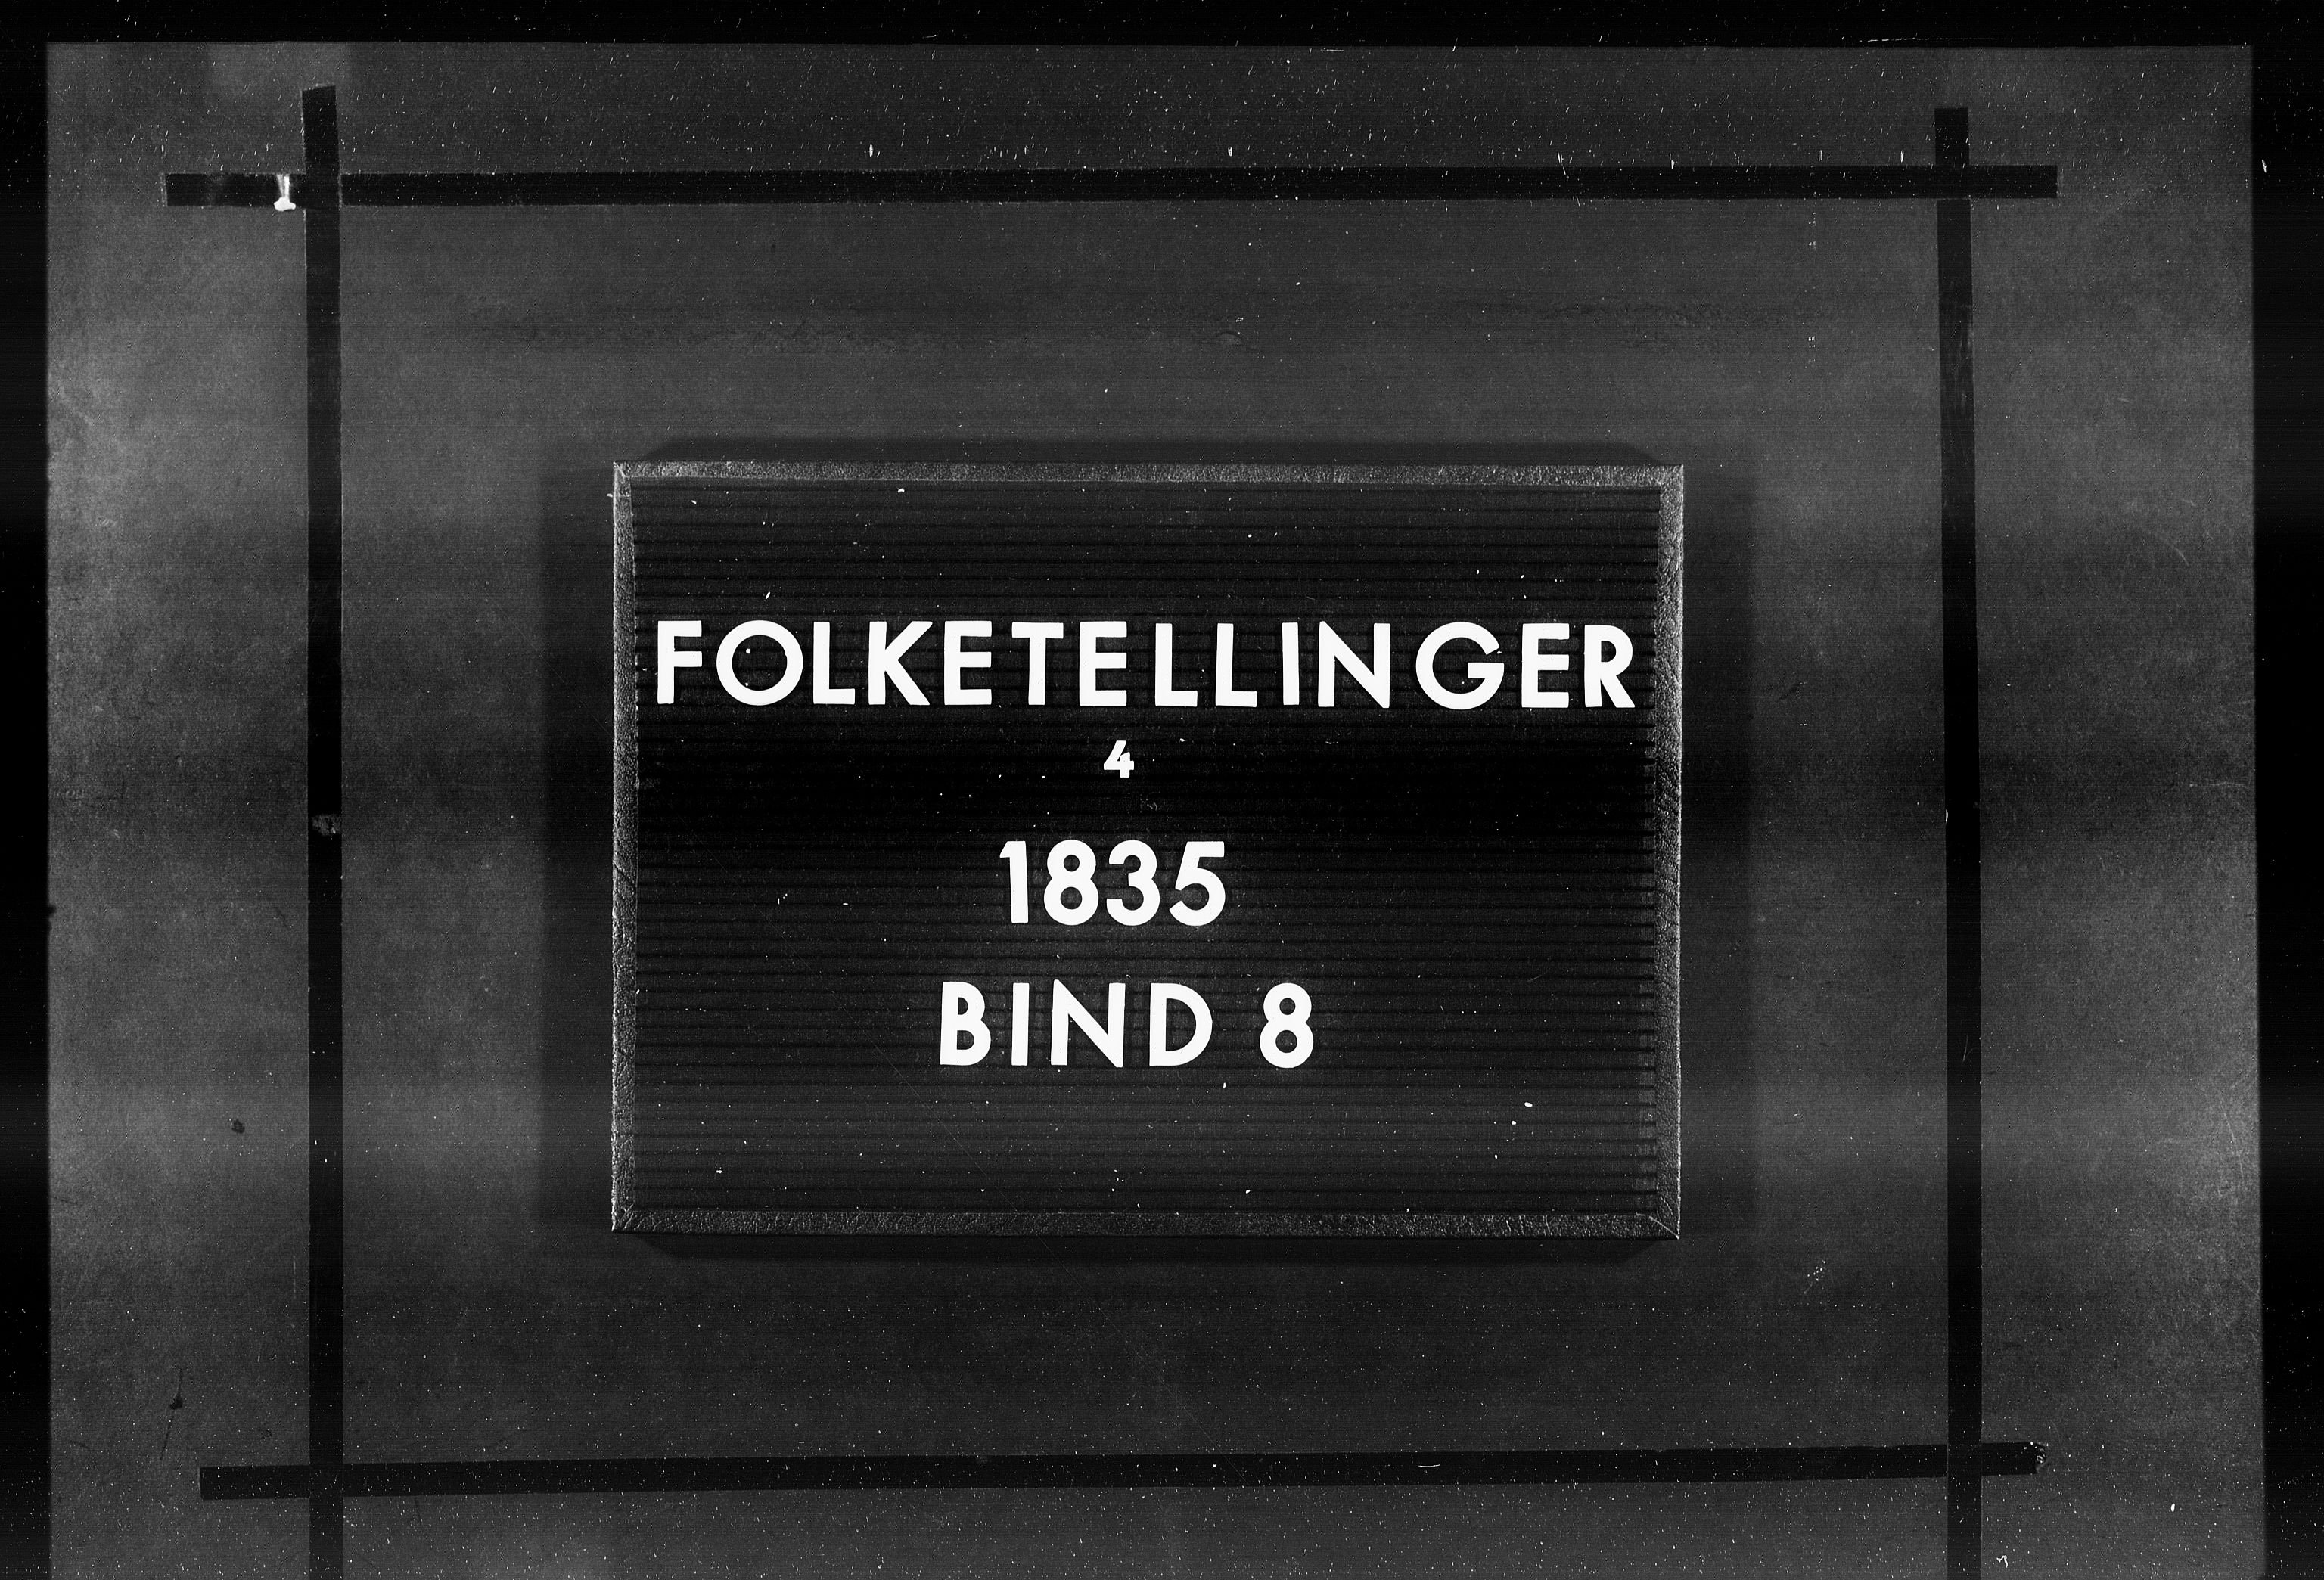 RA, Folketellingen 1835, bind 8: Romsdal amt og Søndre Trondhjem amt, 1835